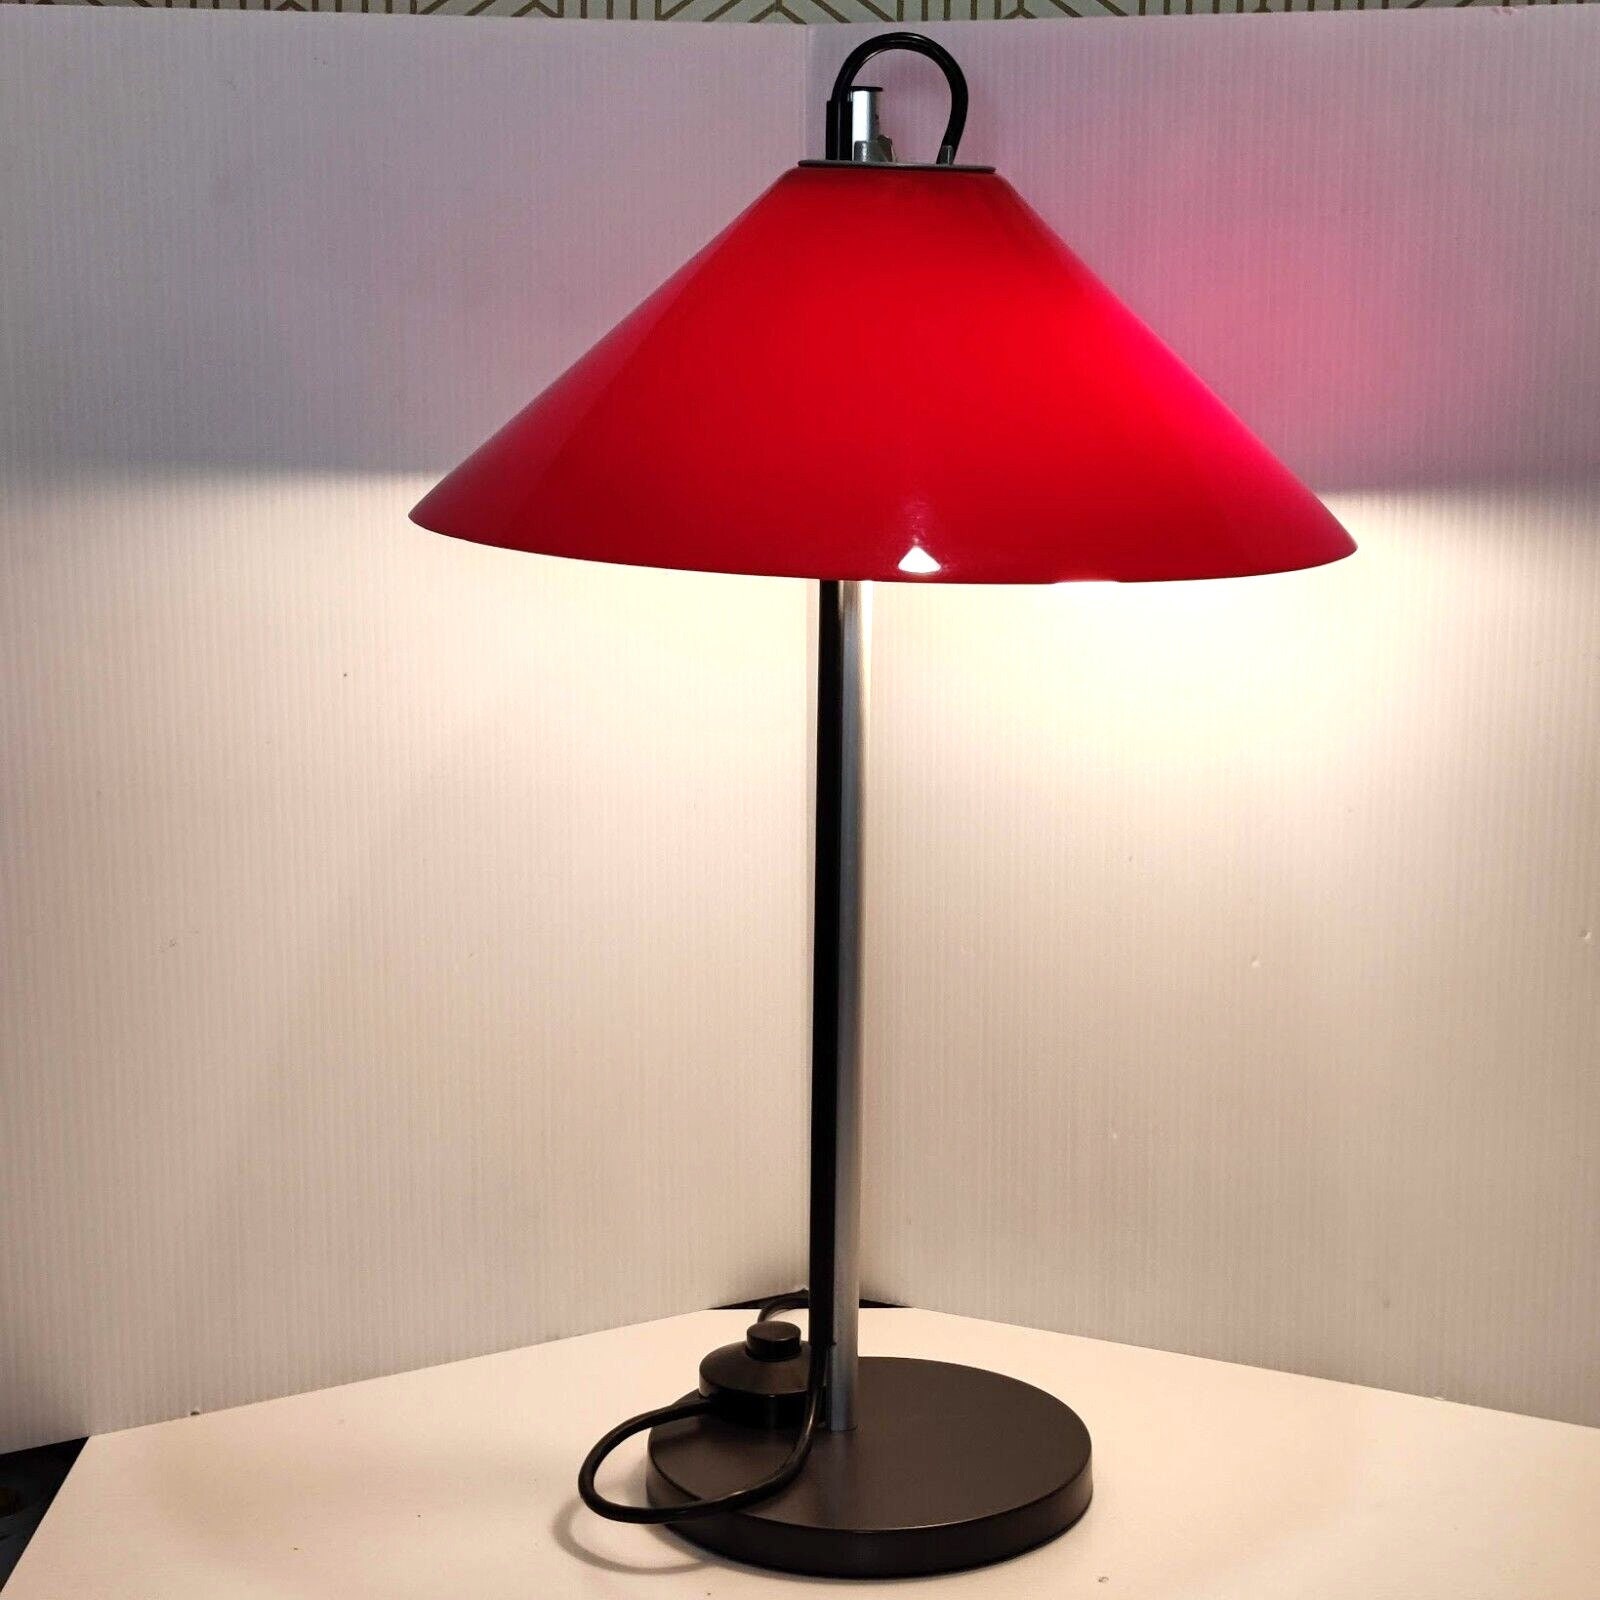 Aggregato Lamp by Enzo Mari & Giancarlo Fassina for Artemide